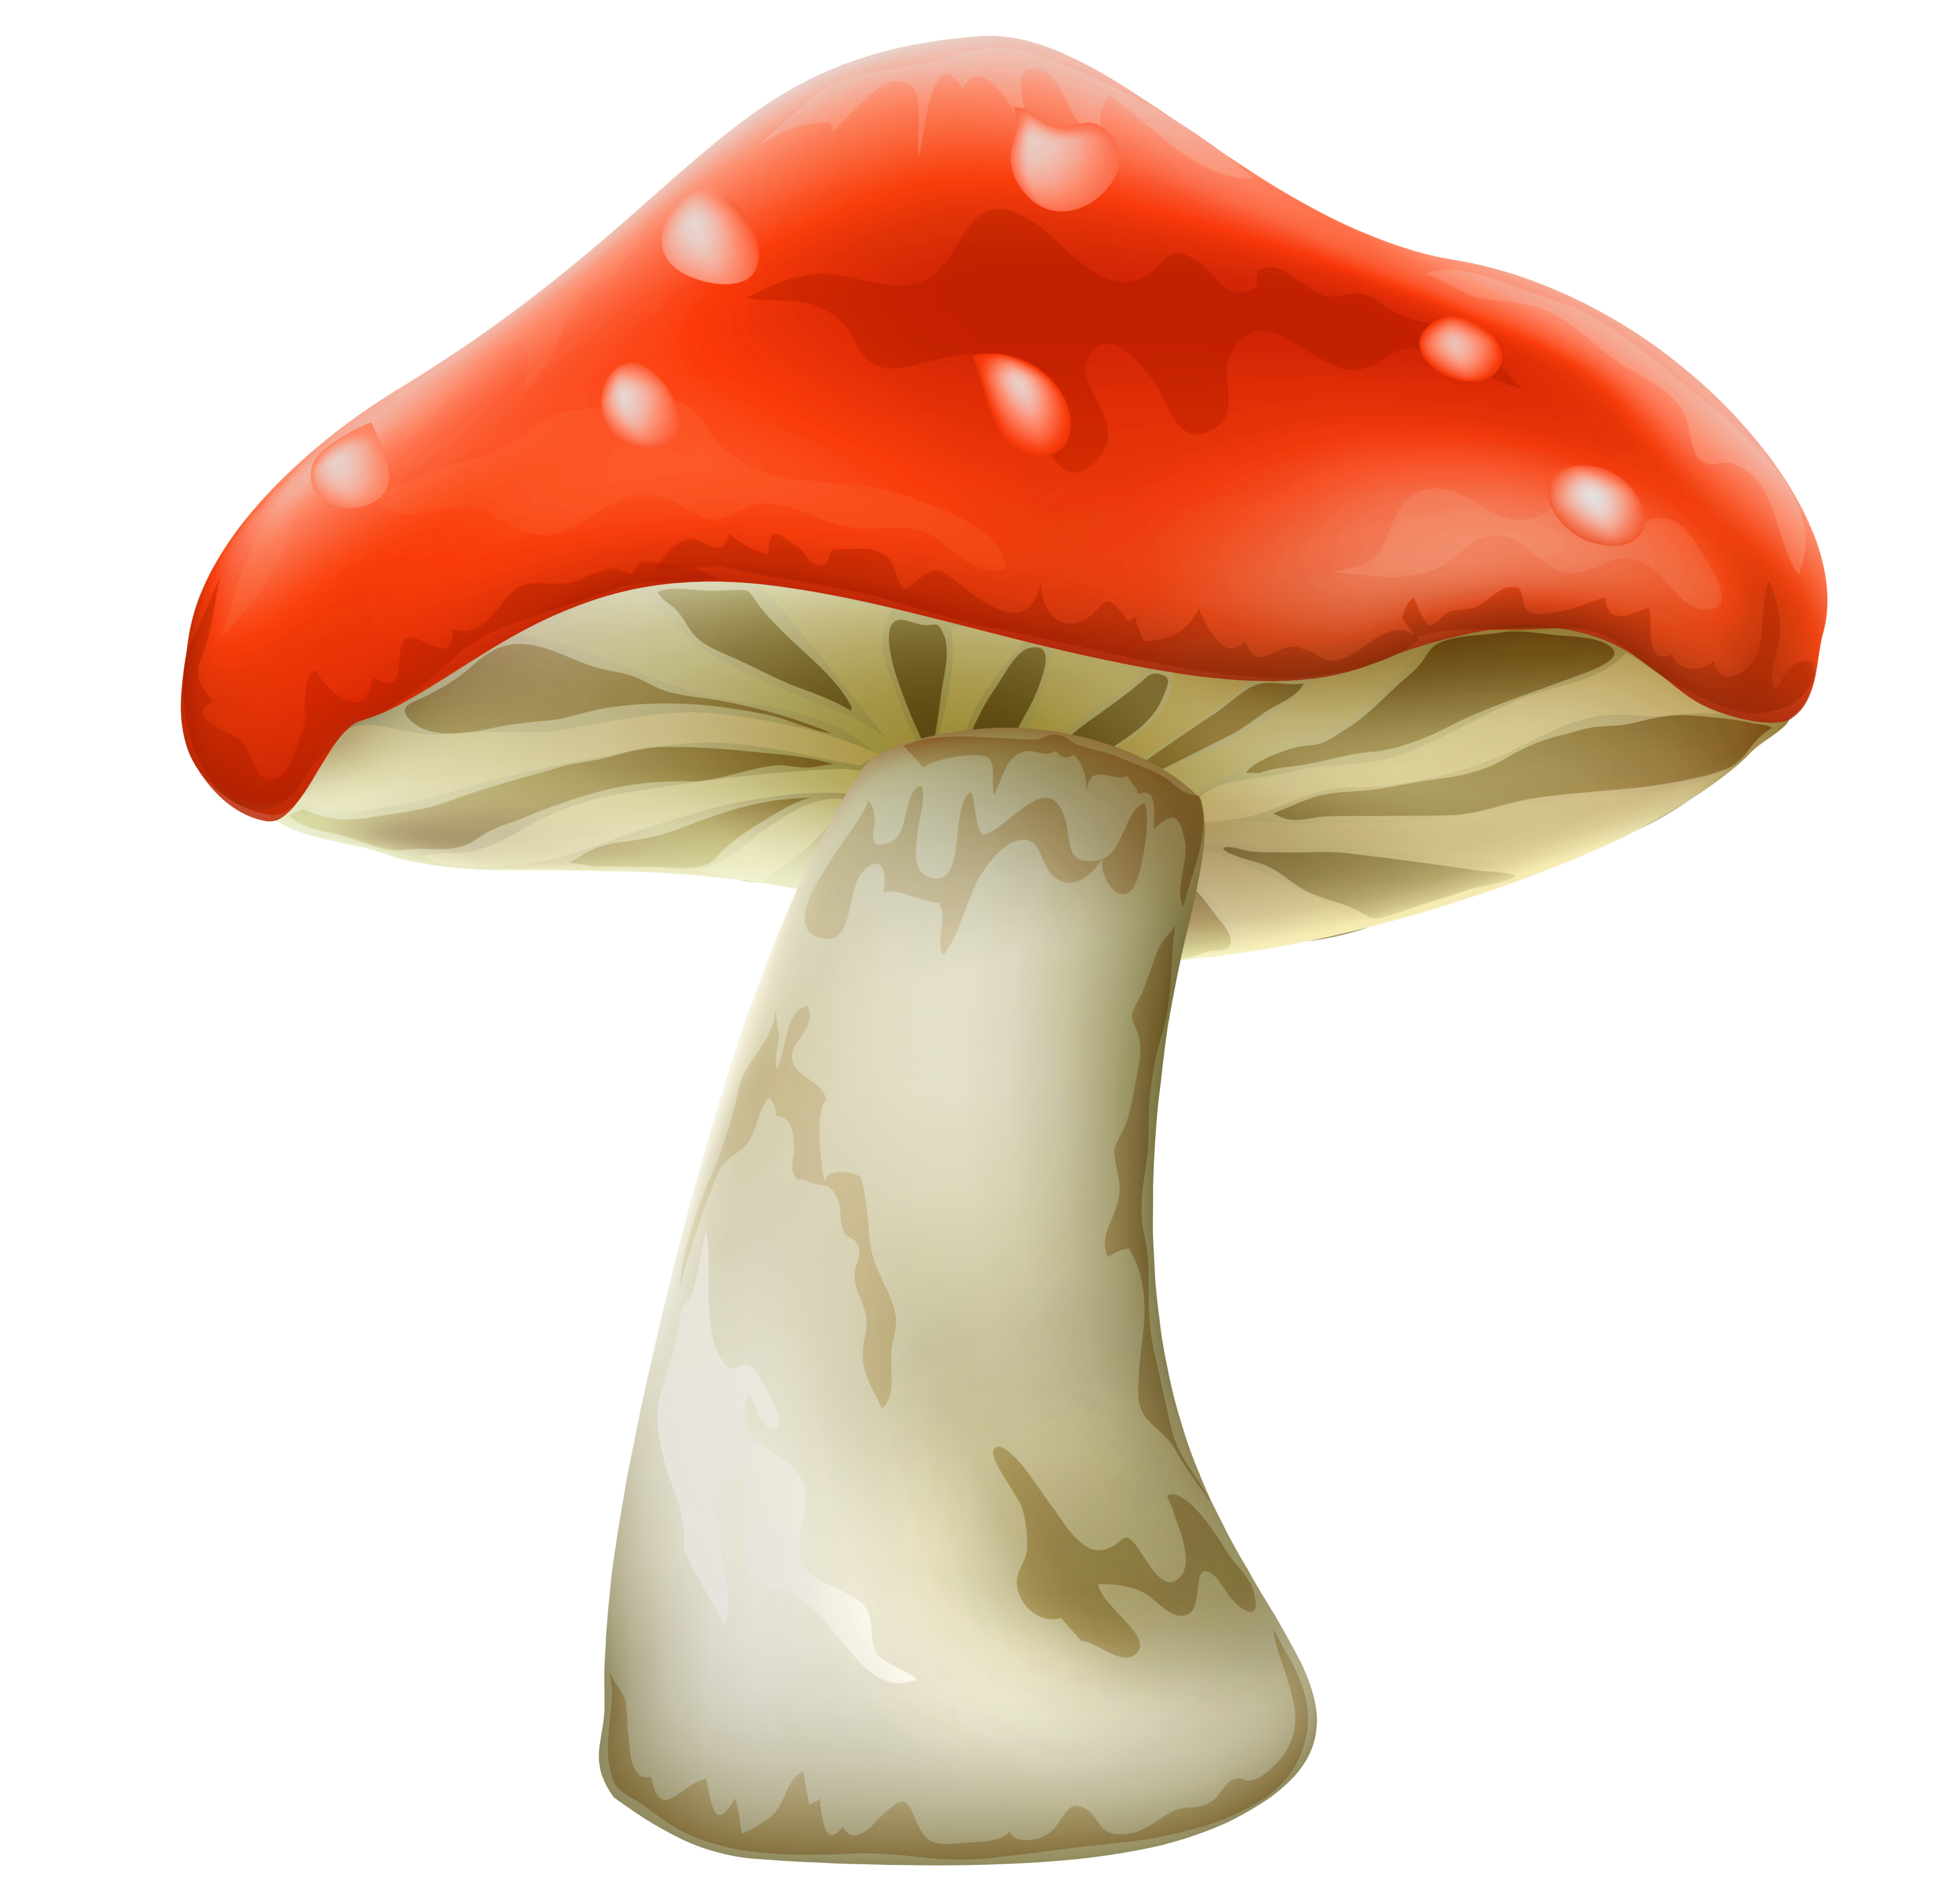 red mushroom clipart - photo #32